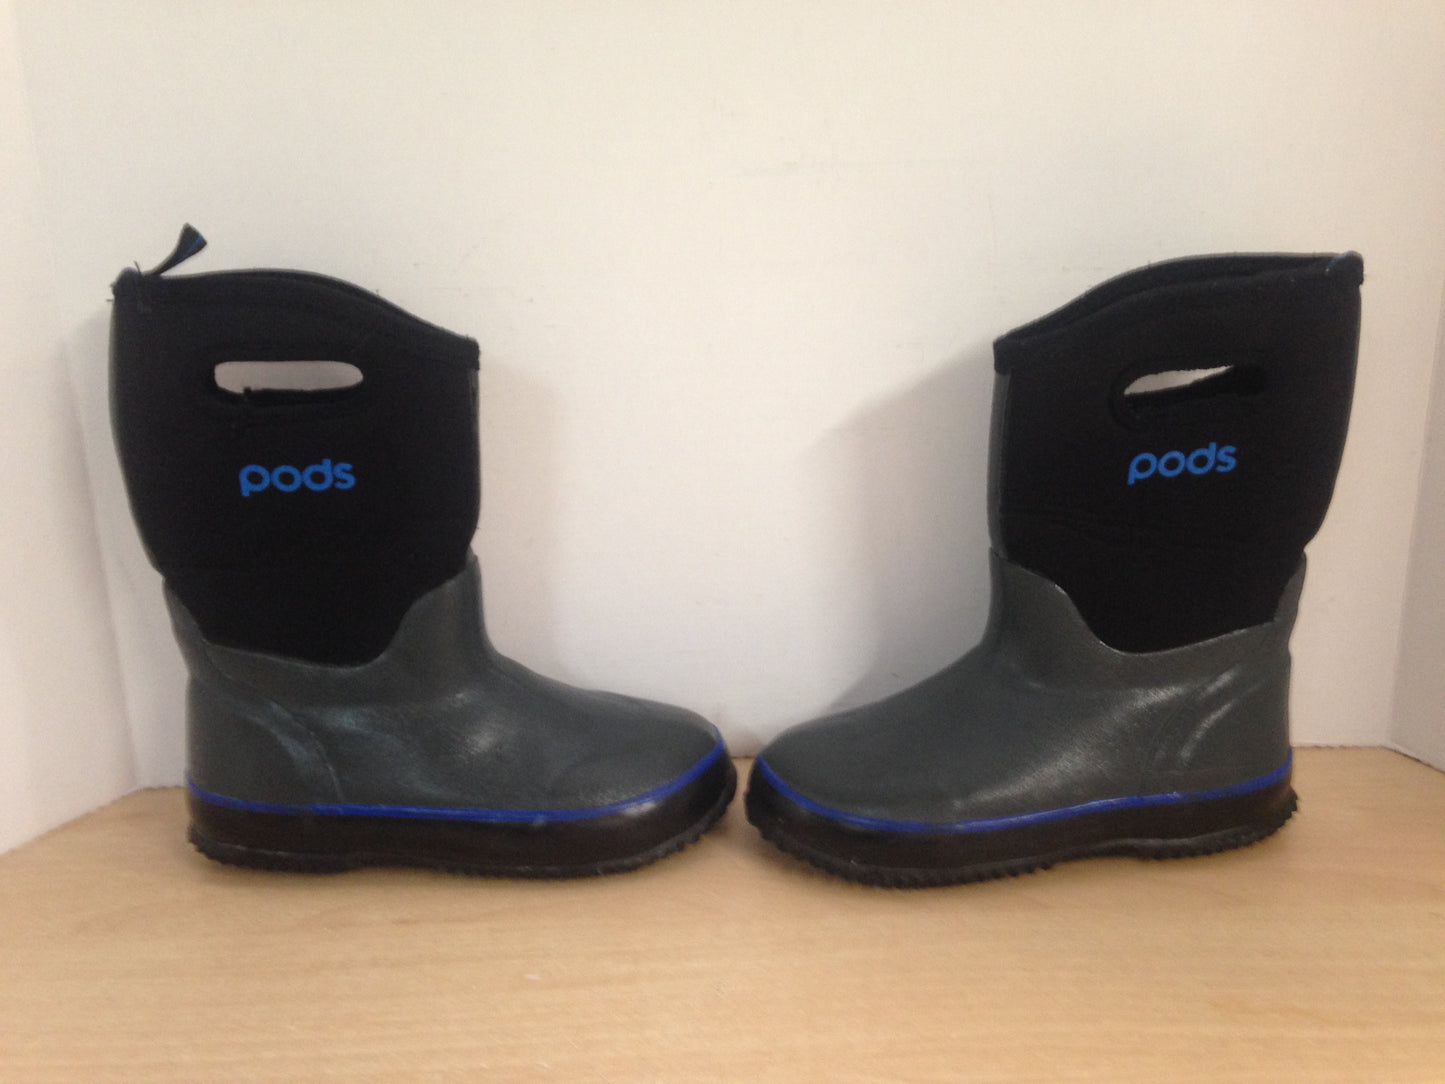 Bogs Style Child Size 3 Pods Black Grey Neoprene Rubber Rain Winter Snow Waterproof Boots